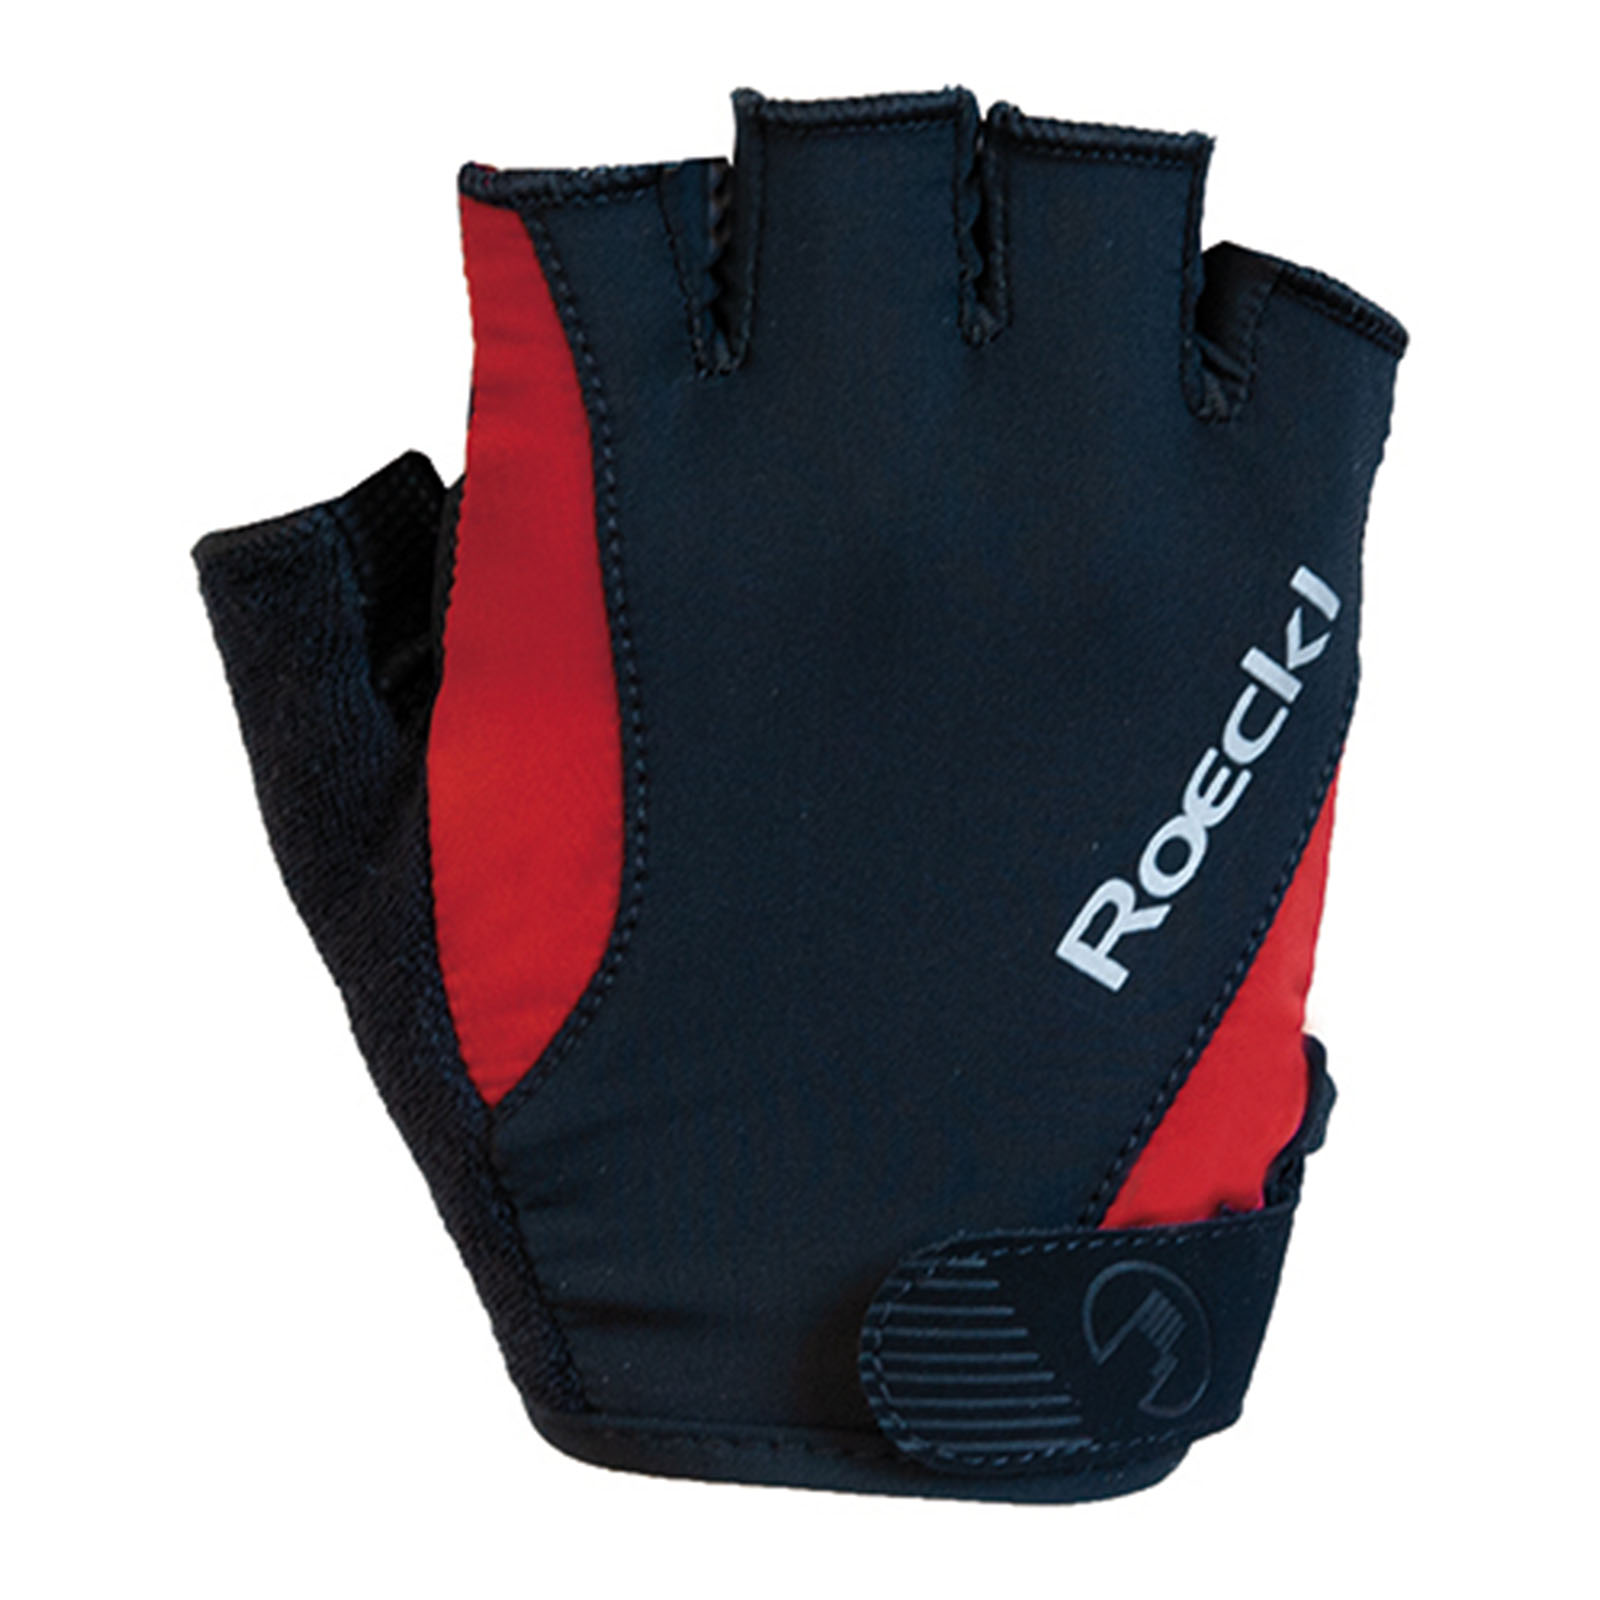 Roeckl Handschuhe Performance Basel schwarz/rot Gr. 7